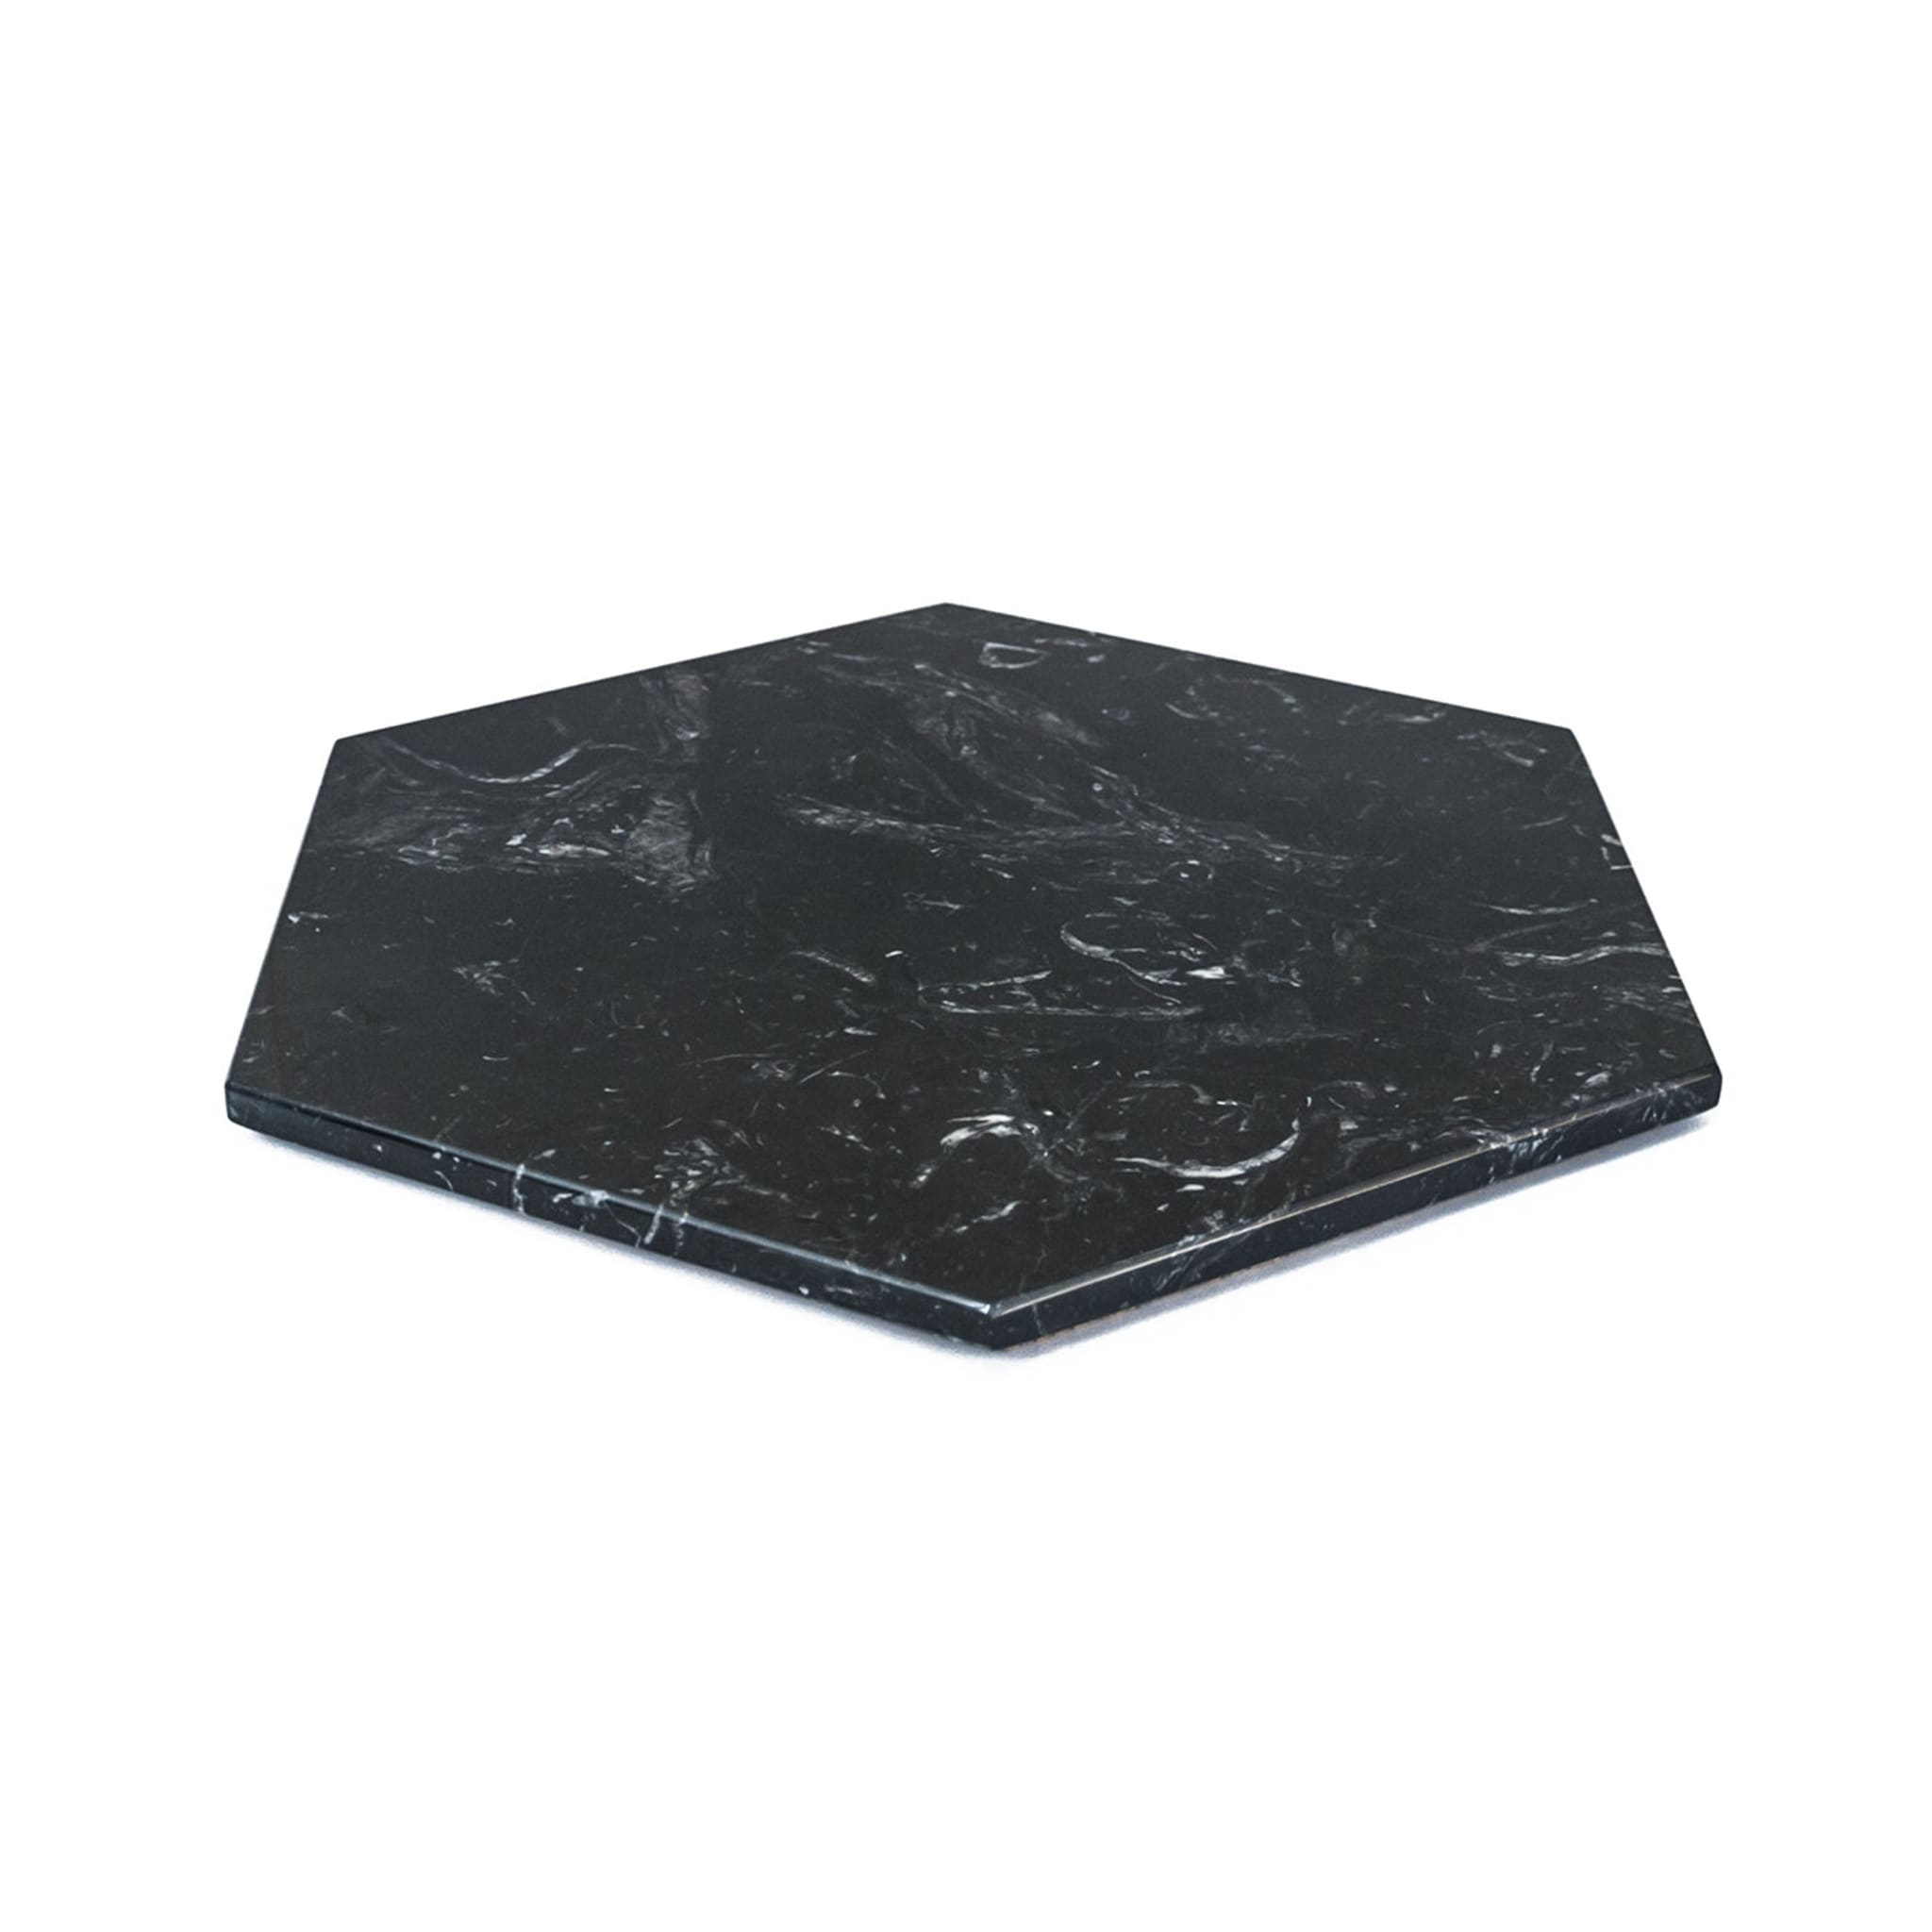 Hexagonal Black Marble Plate - Alternative view 3